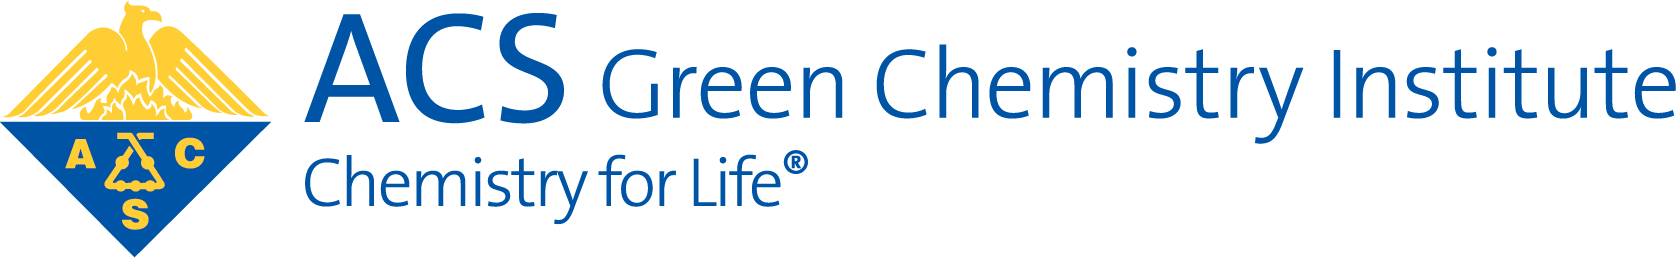 ACS Green Chemistry Institute | Chemistry for Life